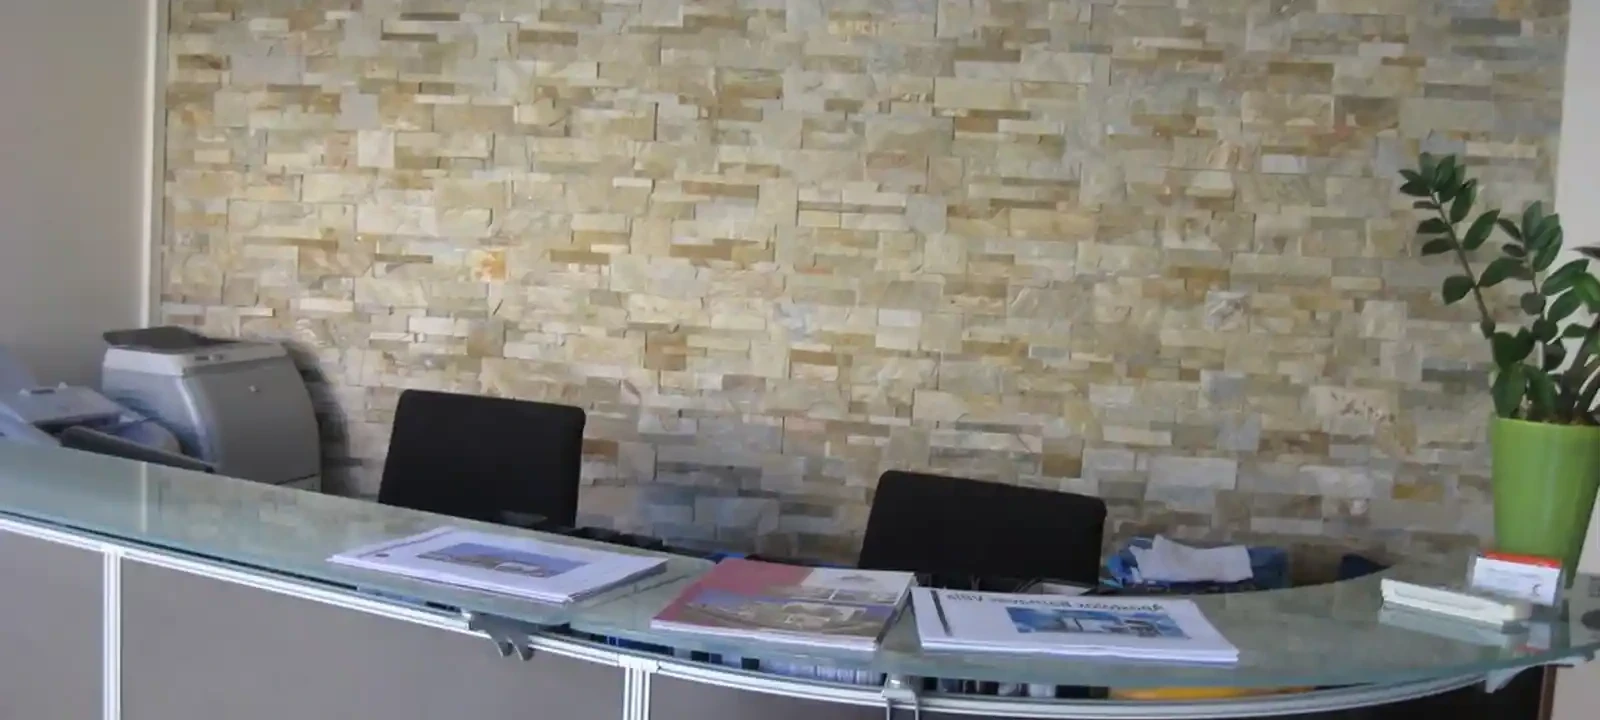 Luxury office to rent - limassol center €1.600, image 1